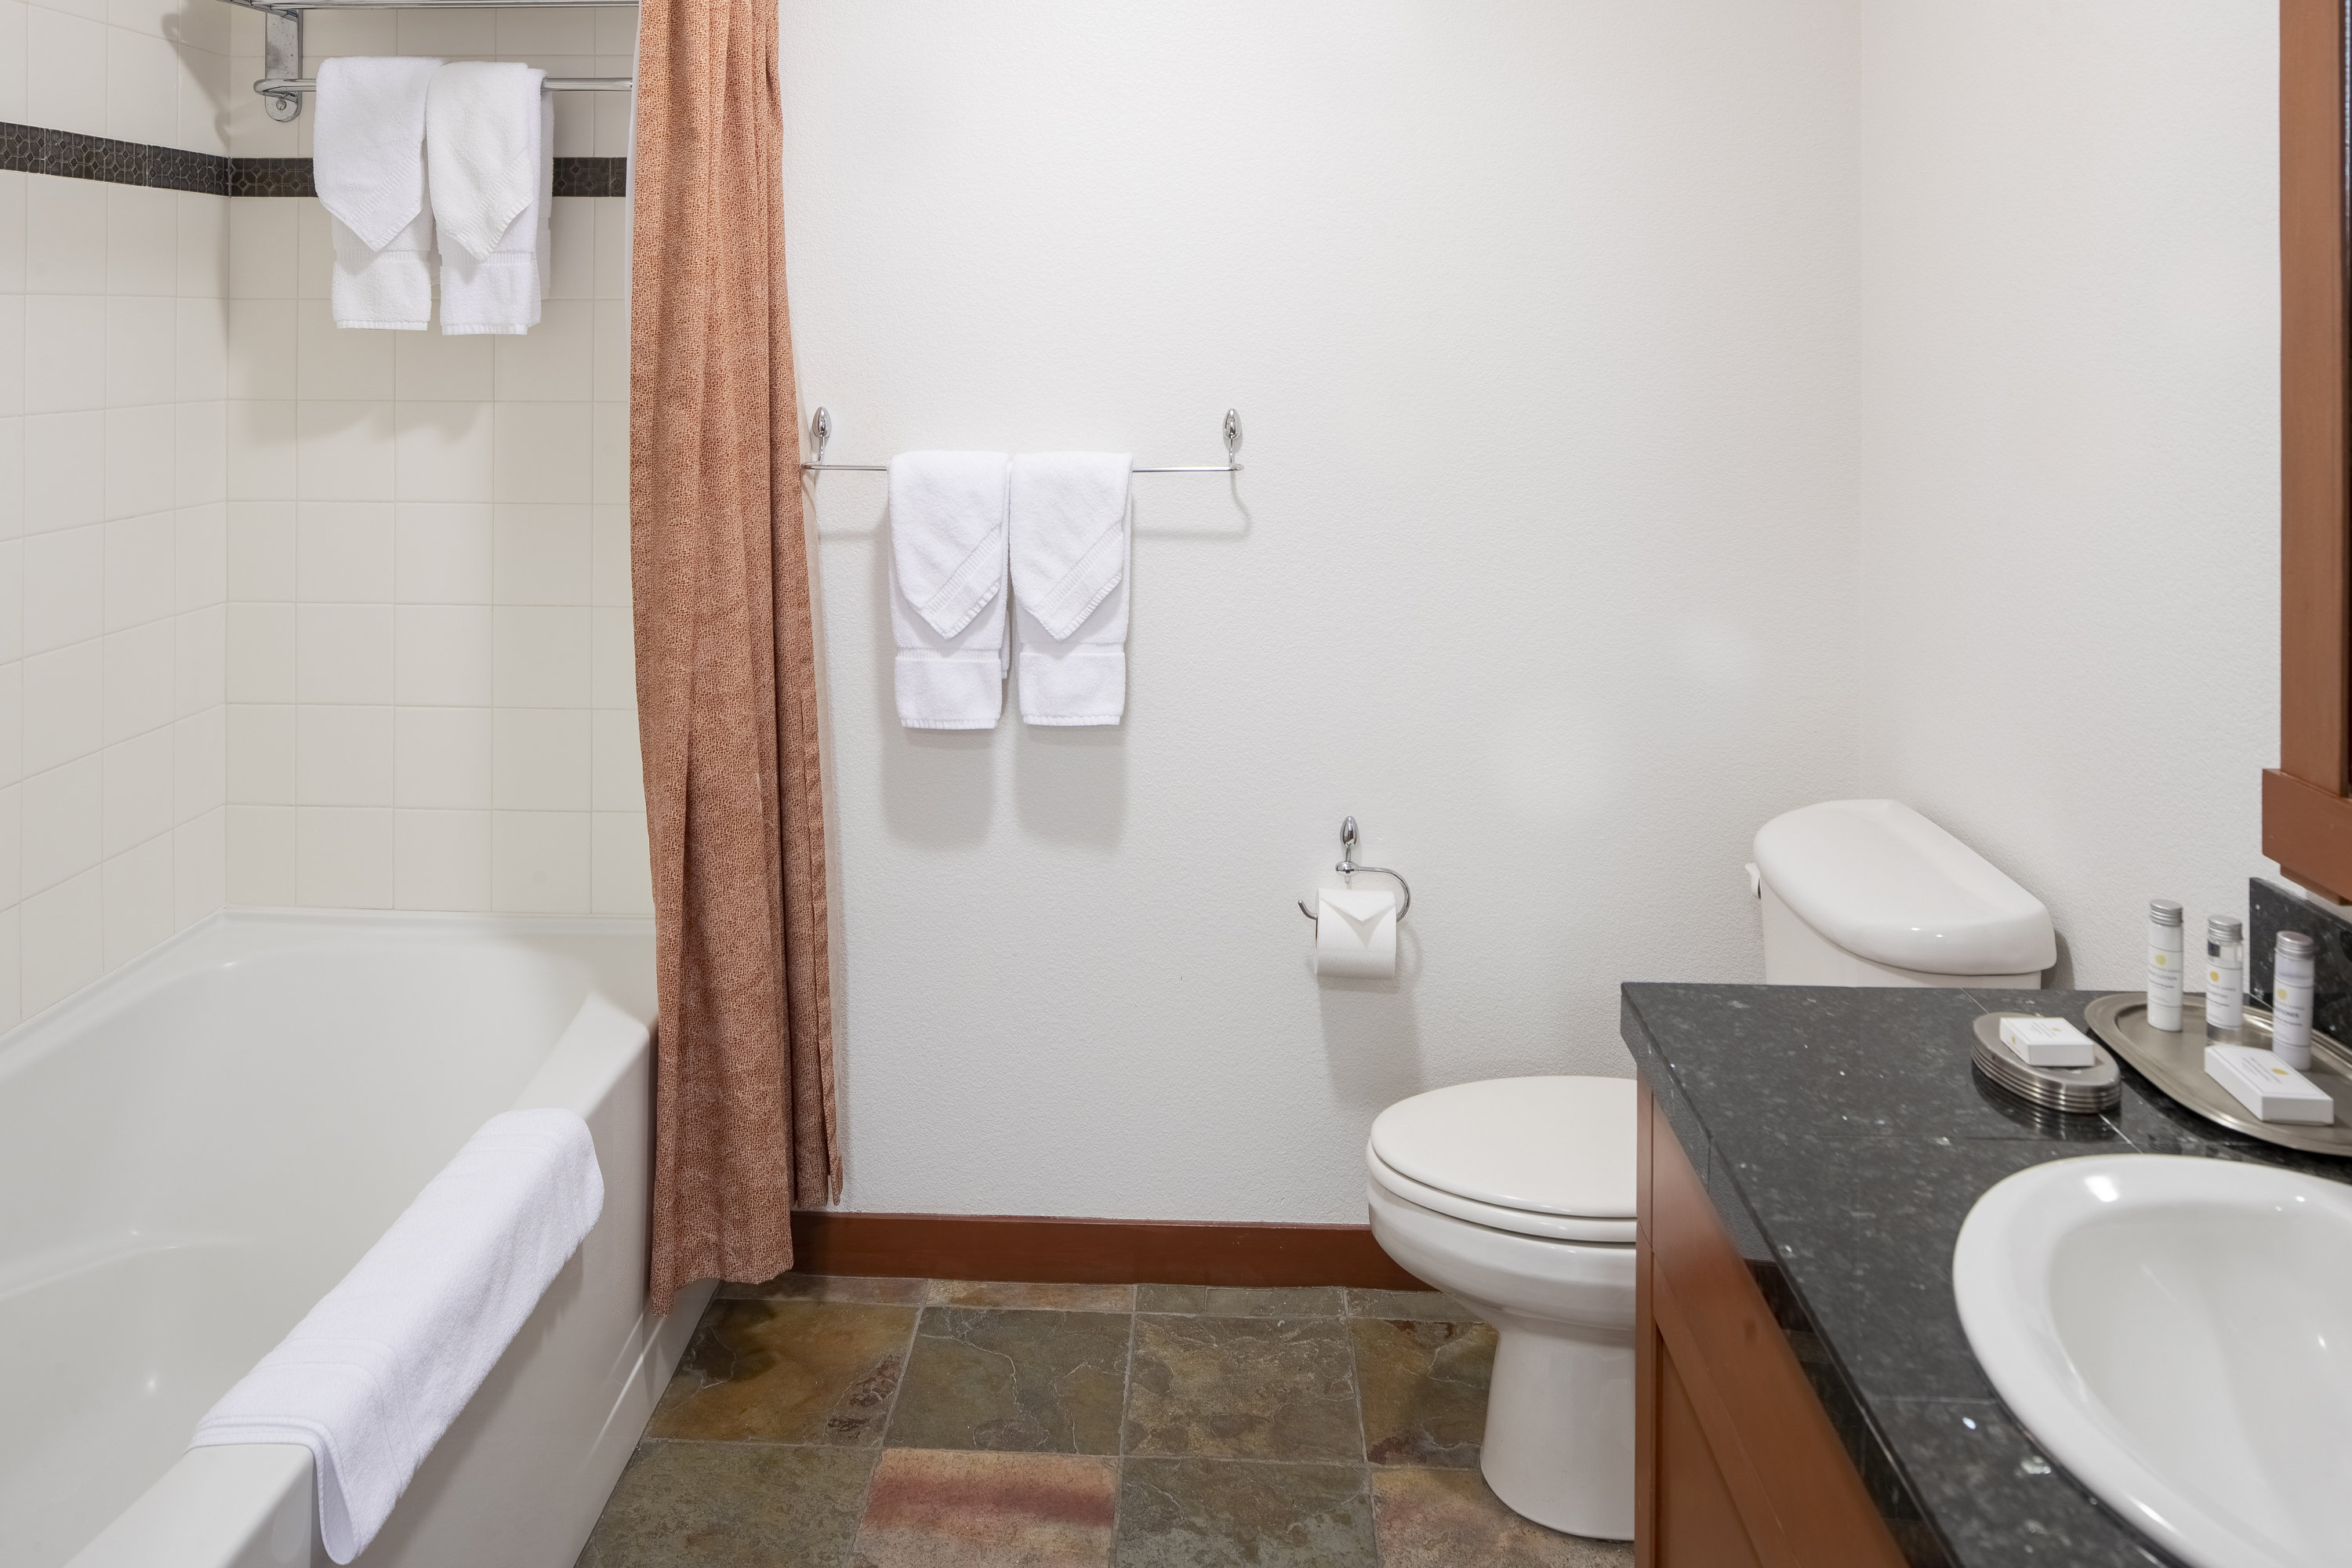 1 Bedroom bathroom with shower/tub combo